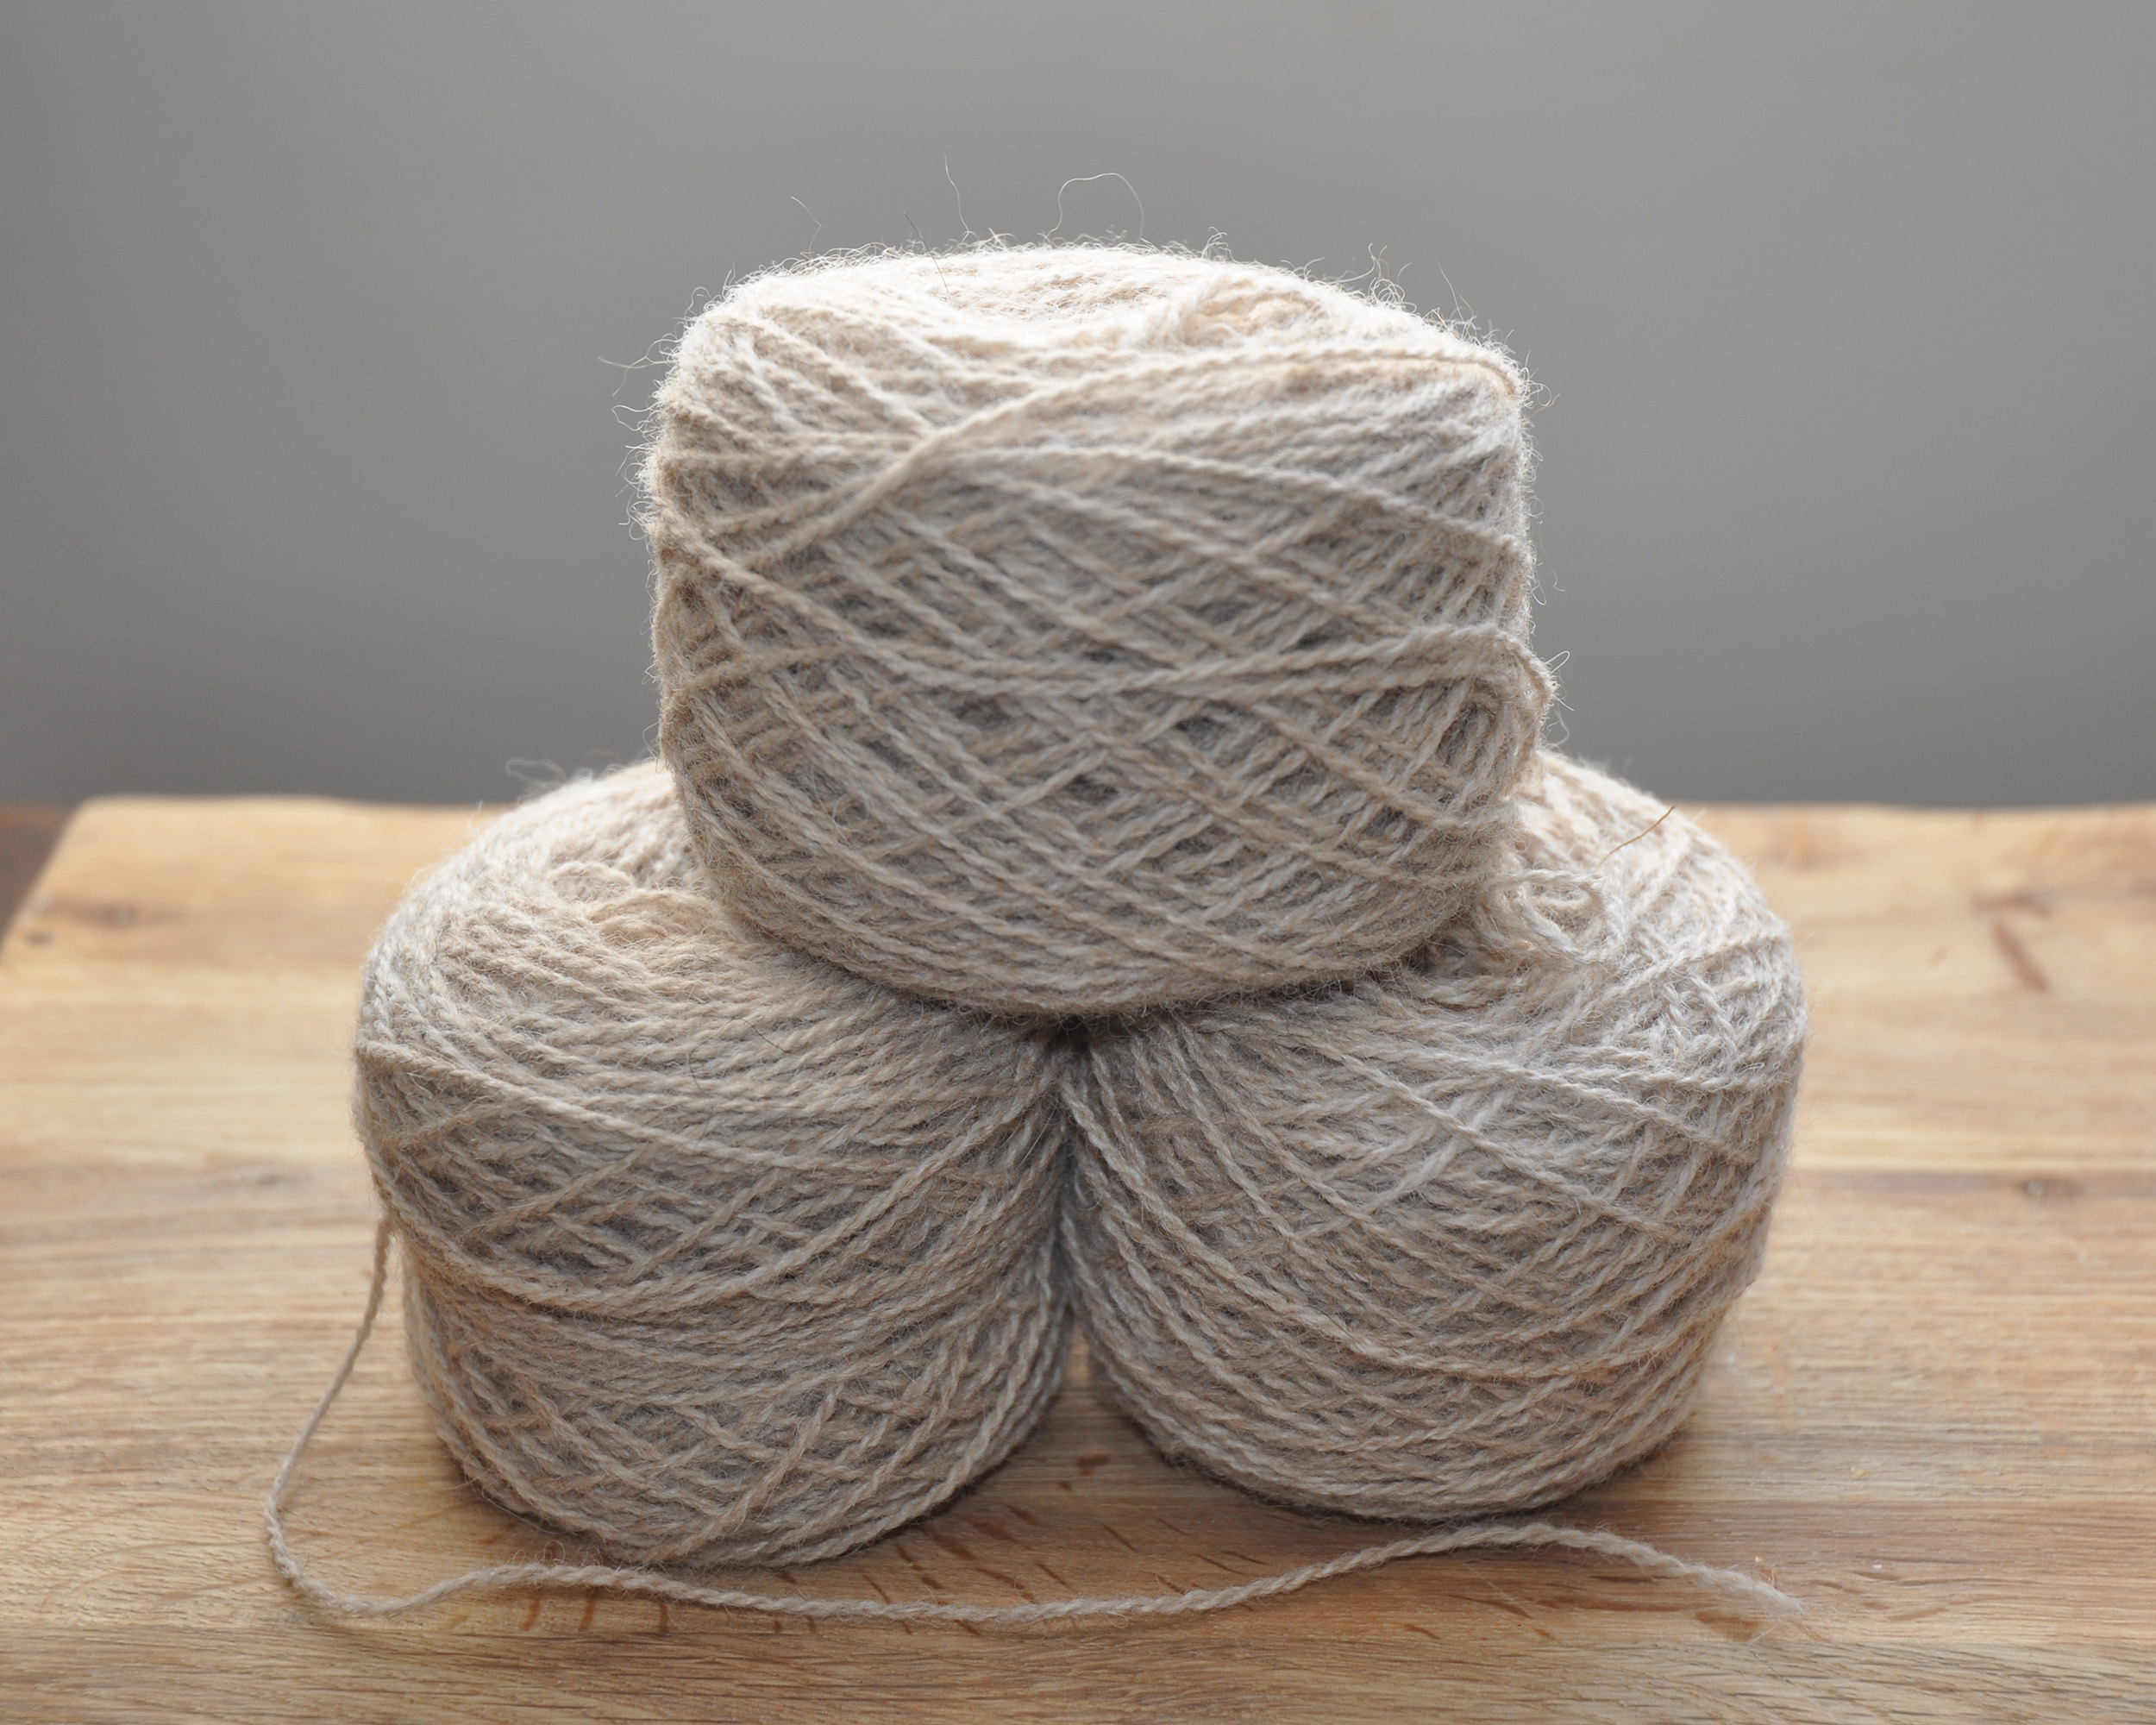 Ewingston Shetland Wool - knitwear, knitting yarn and wool craft supplies image 2